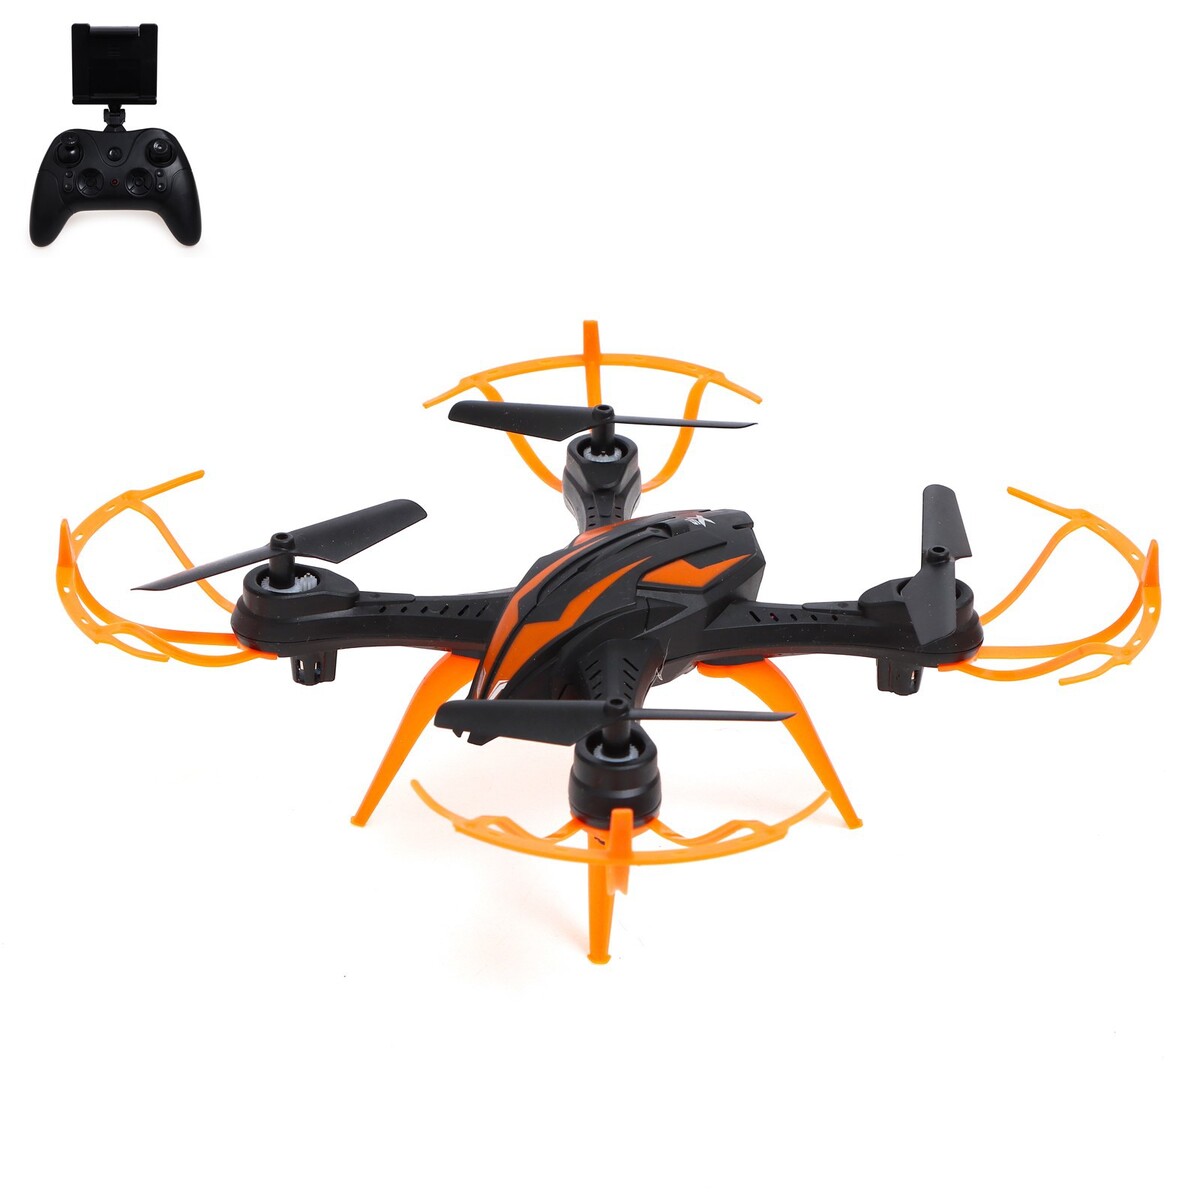 Квадрокоптер lh-x15wf, камера, передача изображения на смартфон, wi-fi, цвет черно-оранжевый как смартфон колю похитил